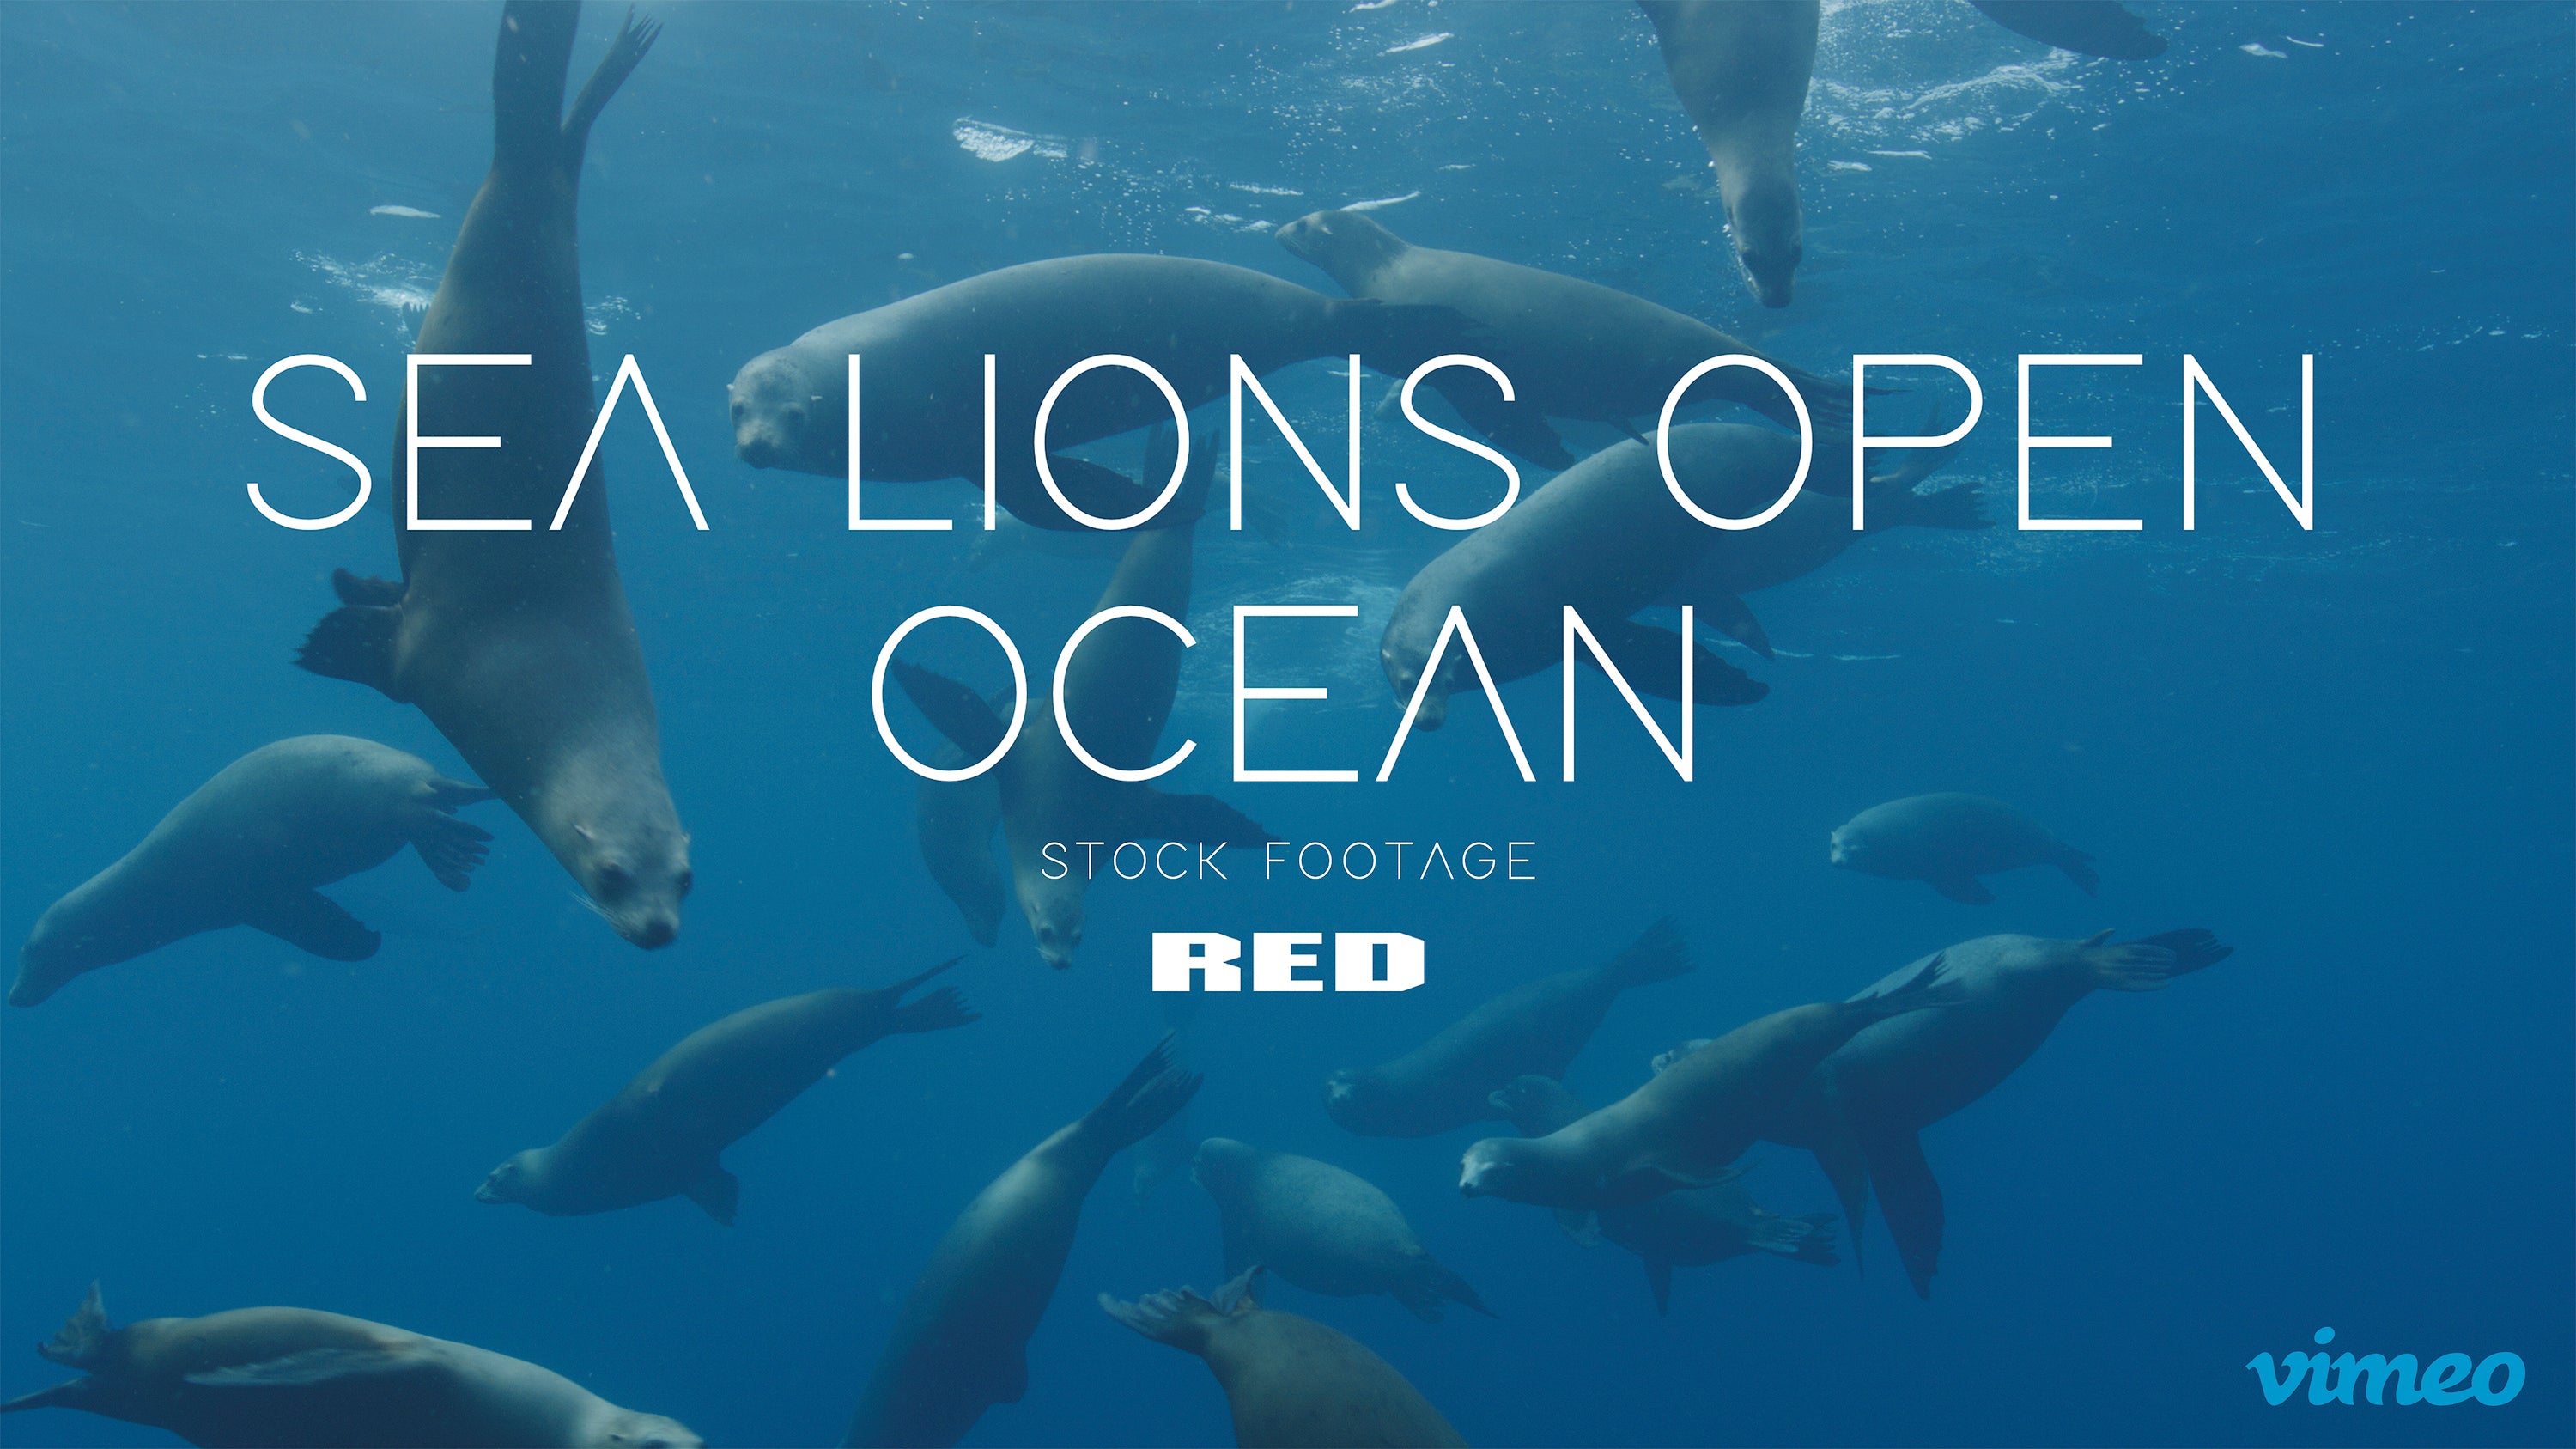 Sea lions open ocean